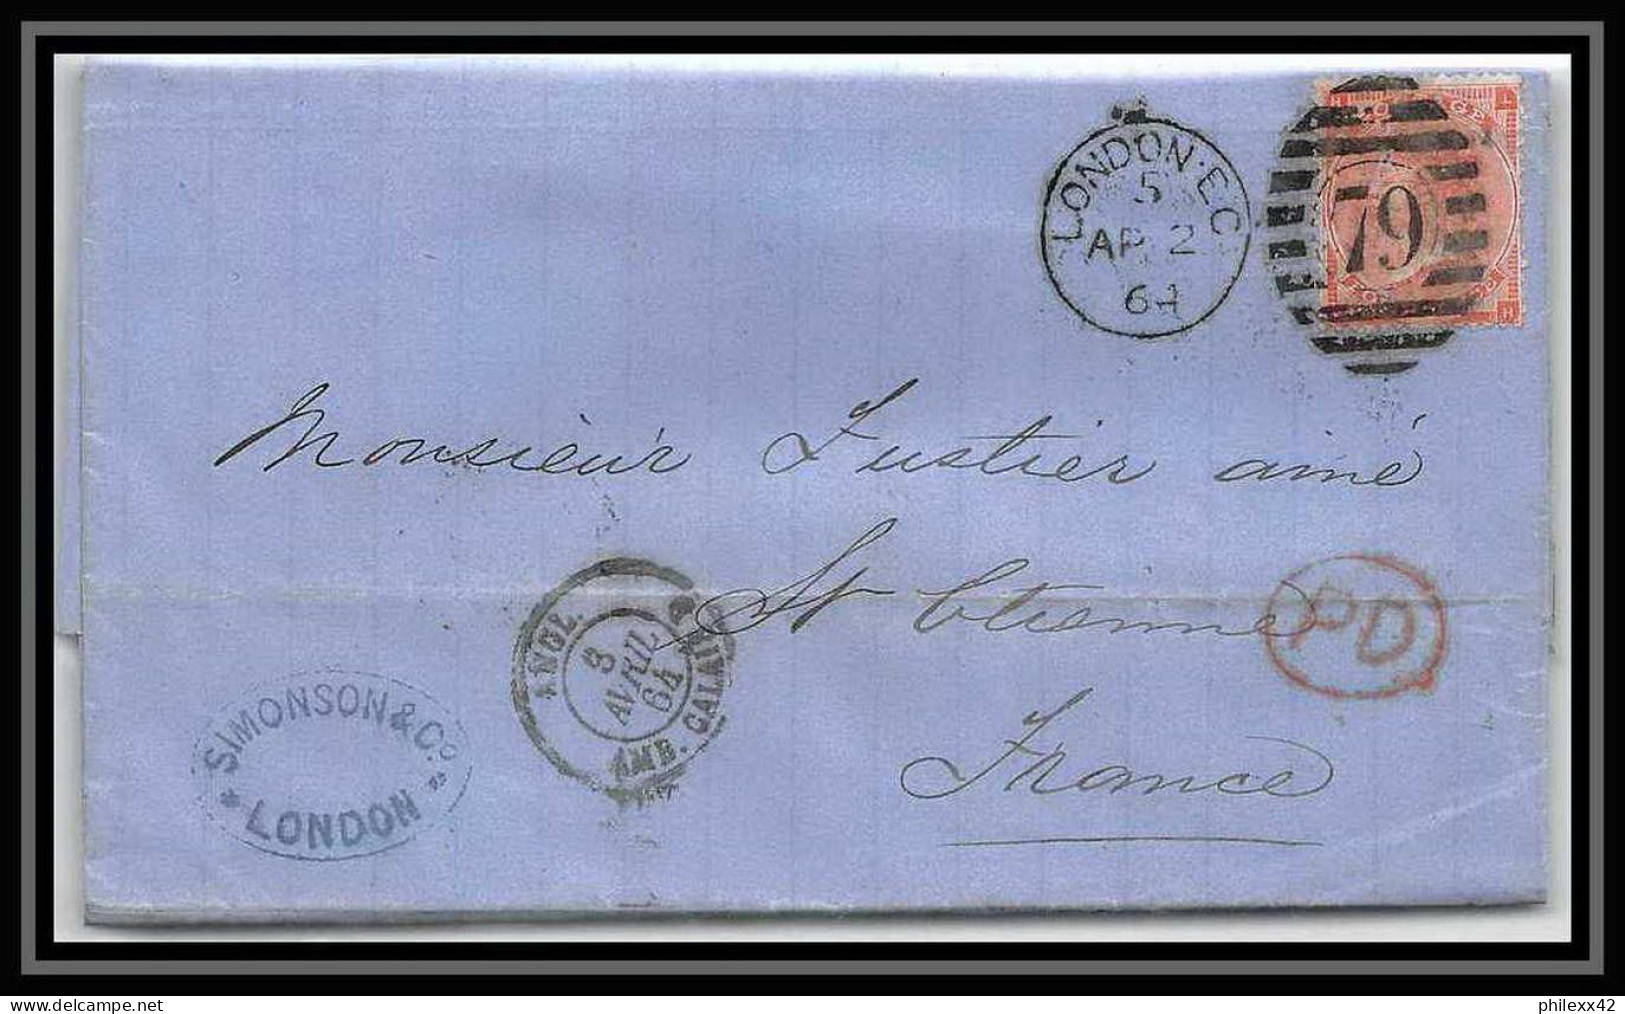 35751 N°32 Victoria 4p Red London St Etienne France 1864 Cachet 79 Lettre Cover Grande Bretagne England - Storia Postale